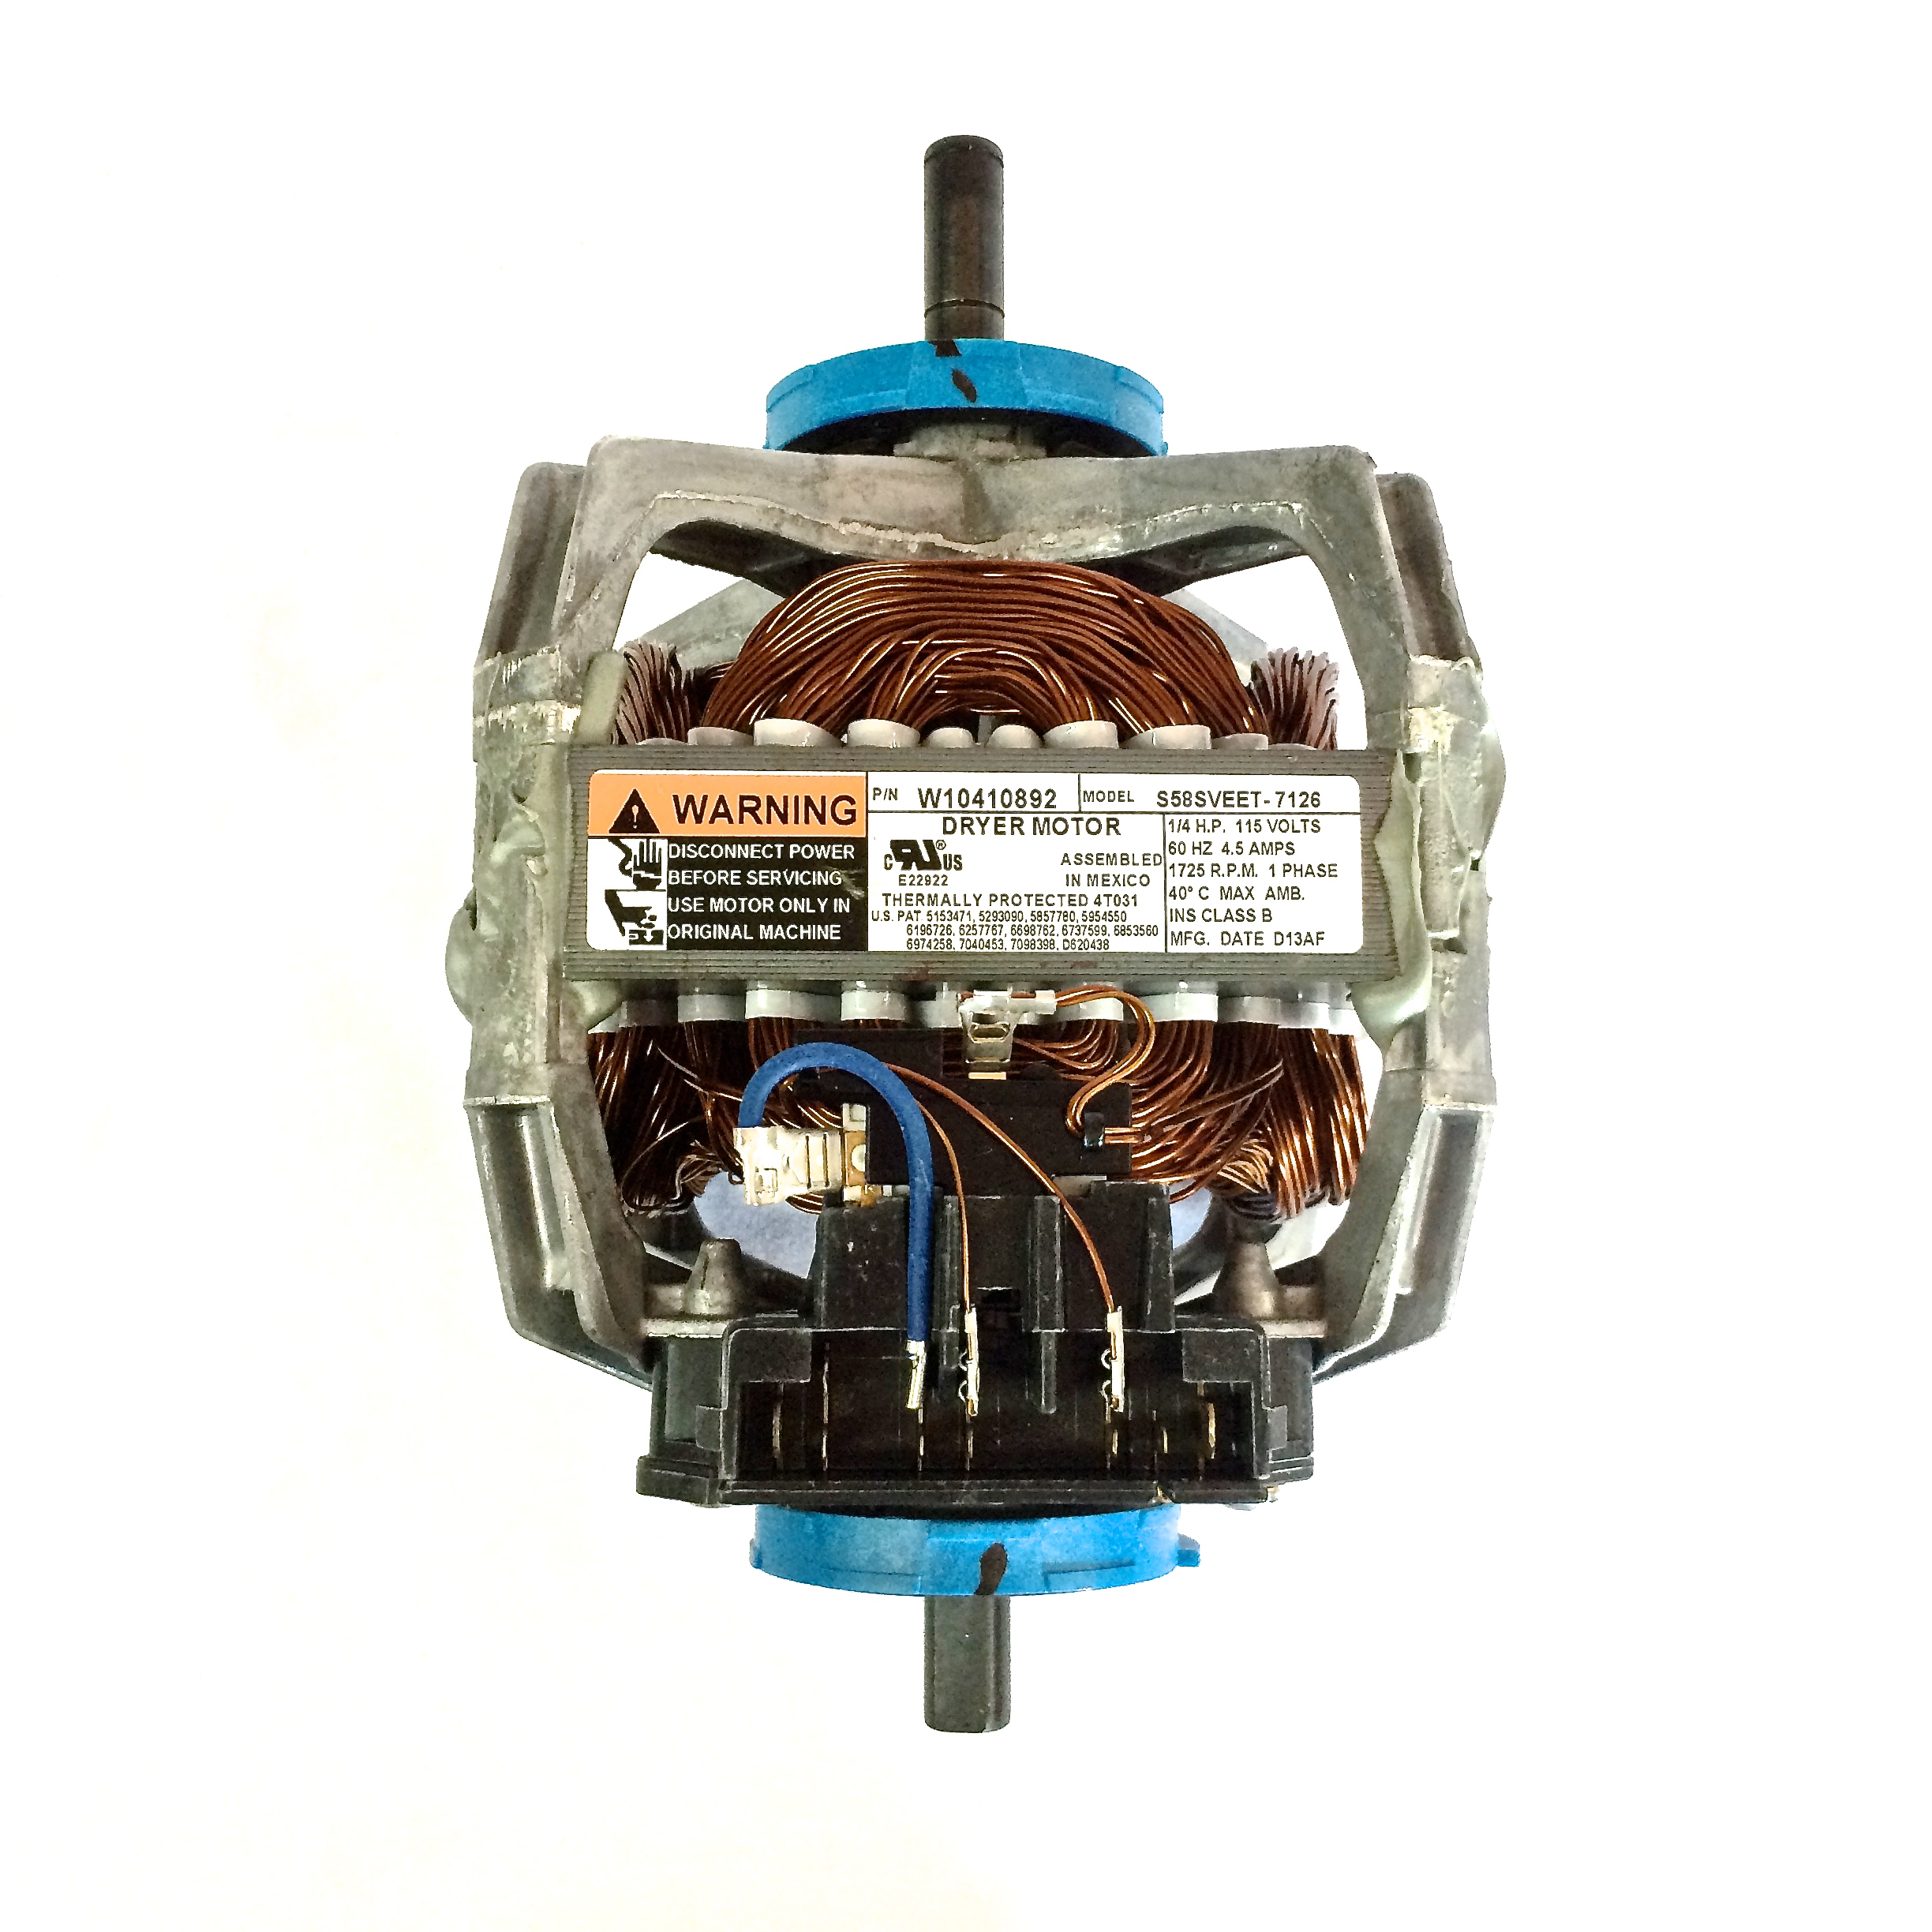 Whirlpool Dryer Drive Motor. Part #W10410999